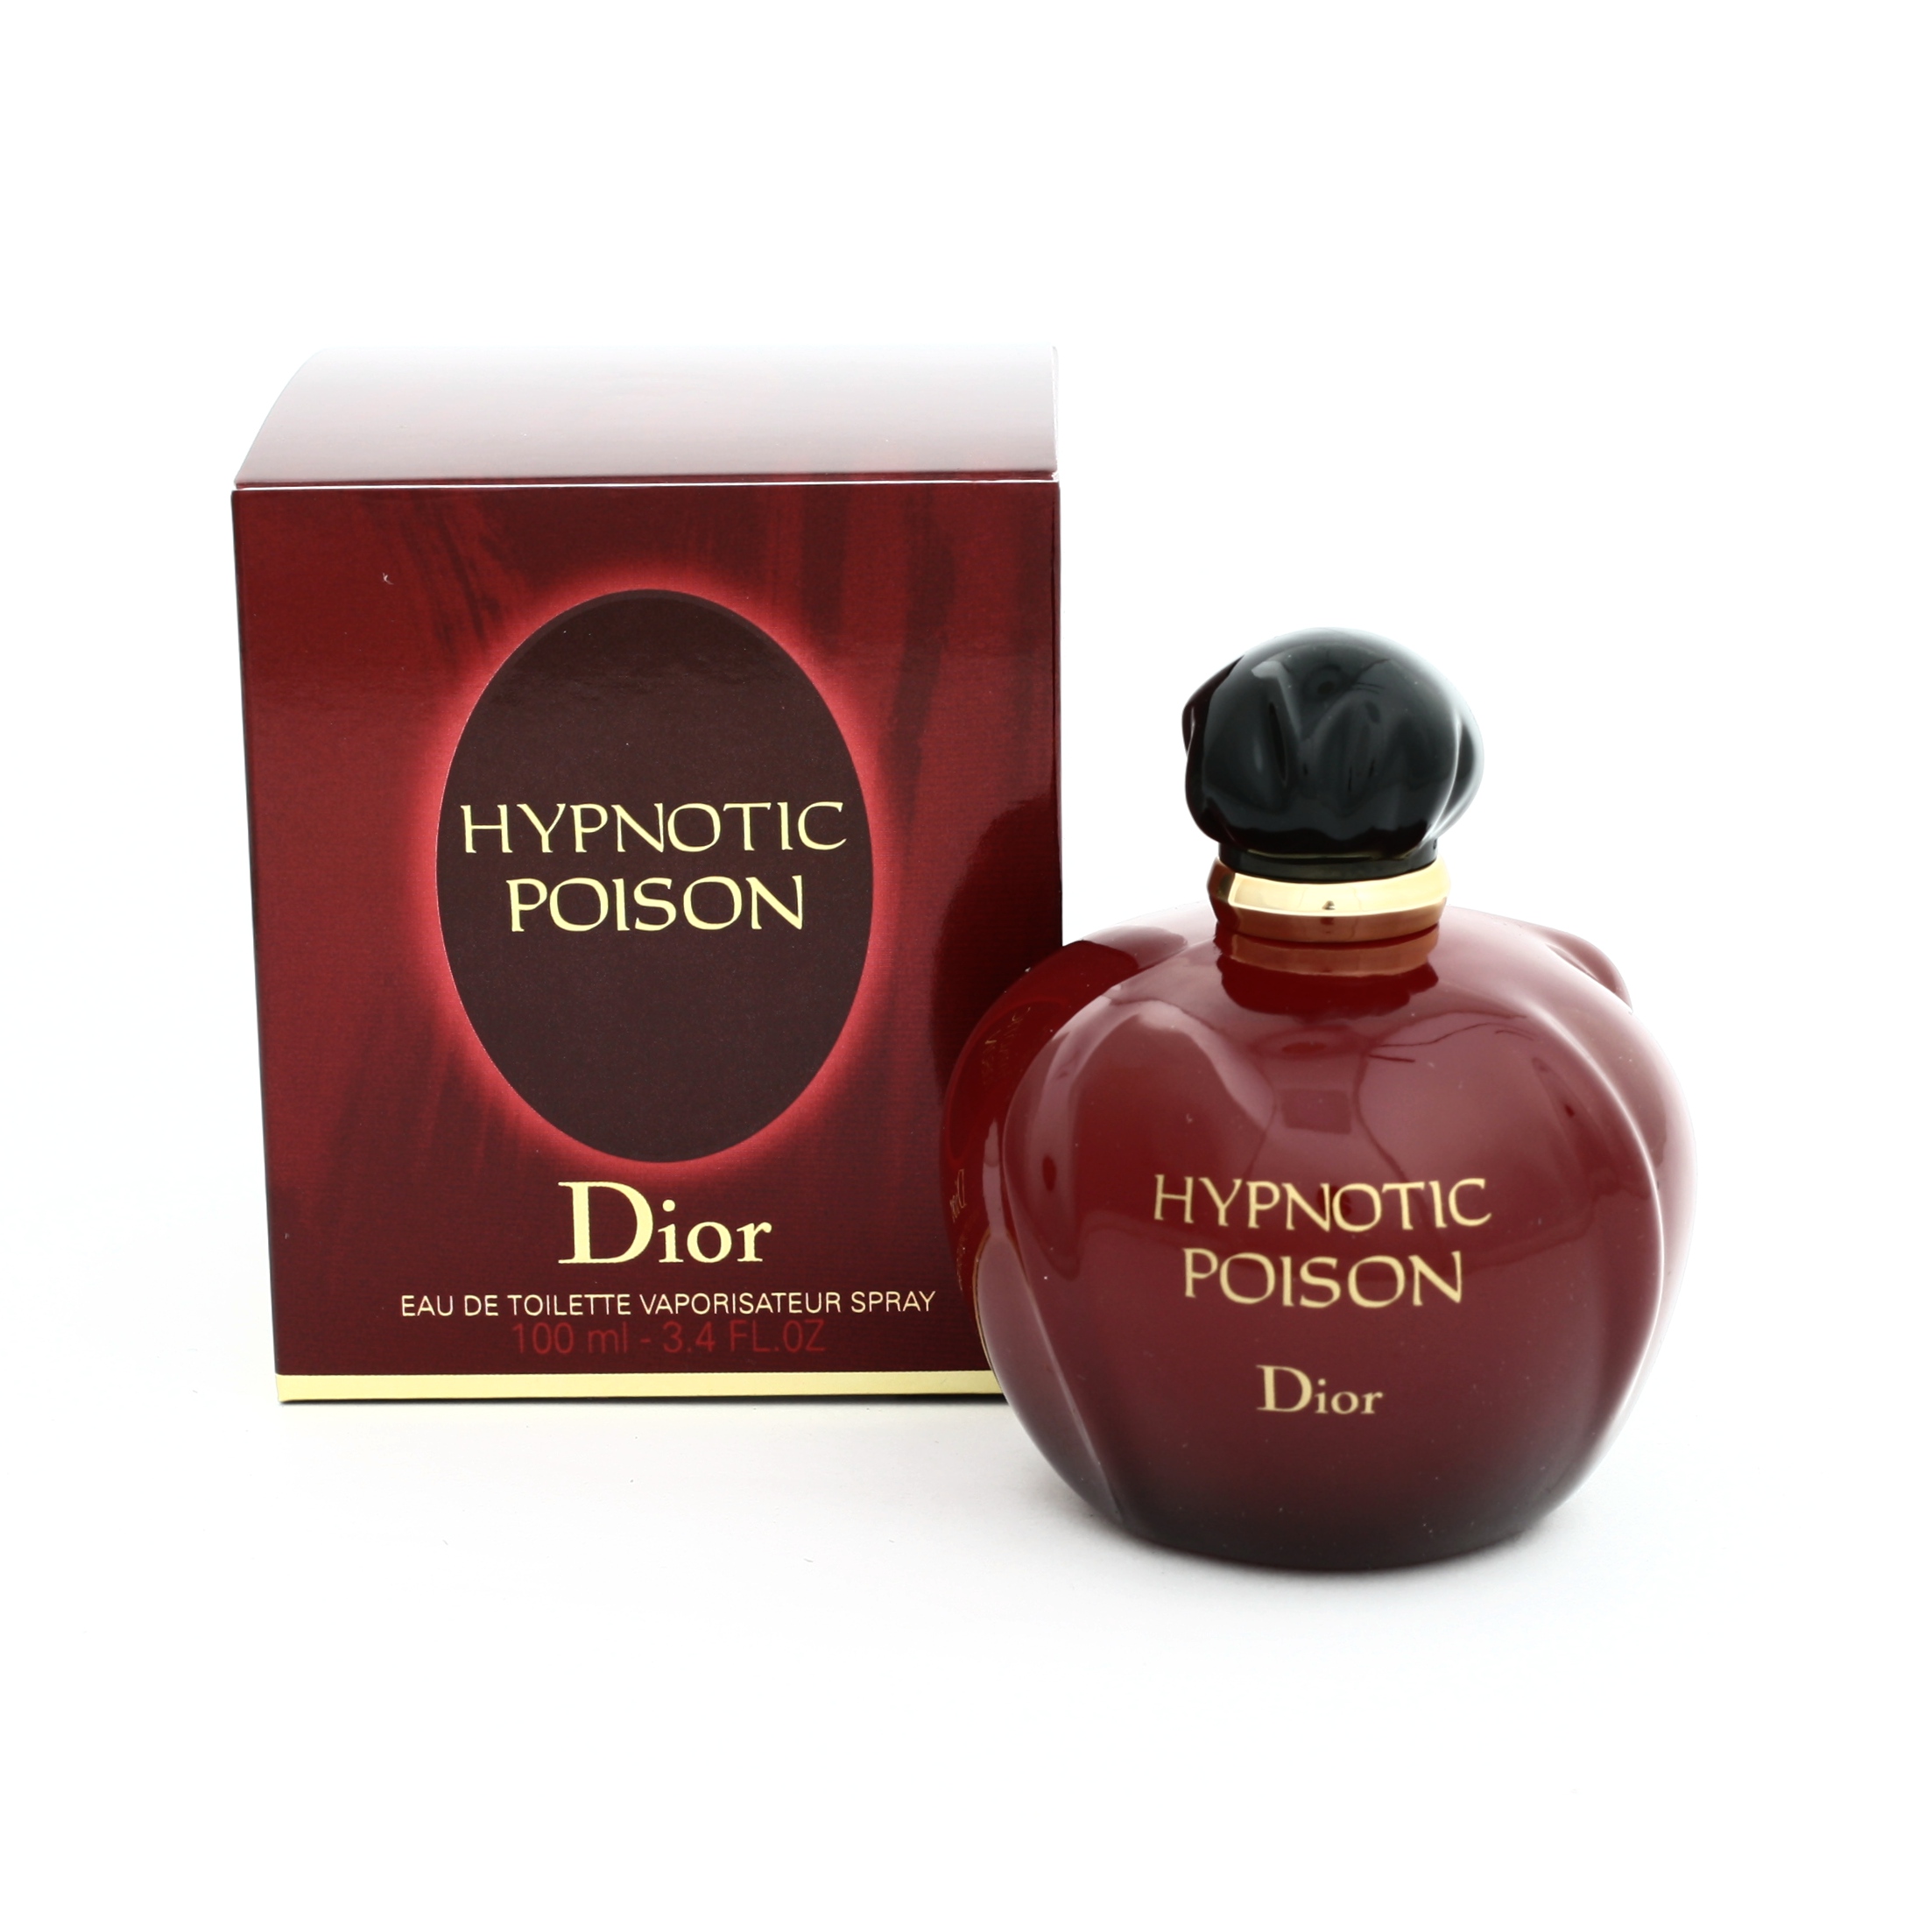 hypnotic poison cheapest price